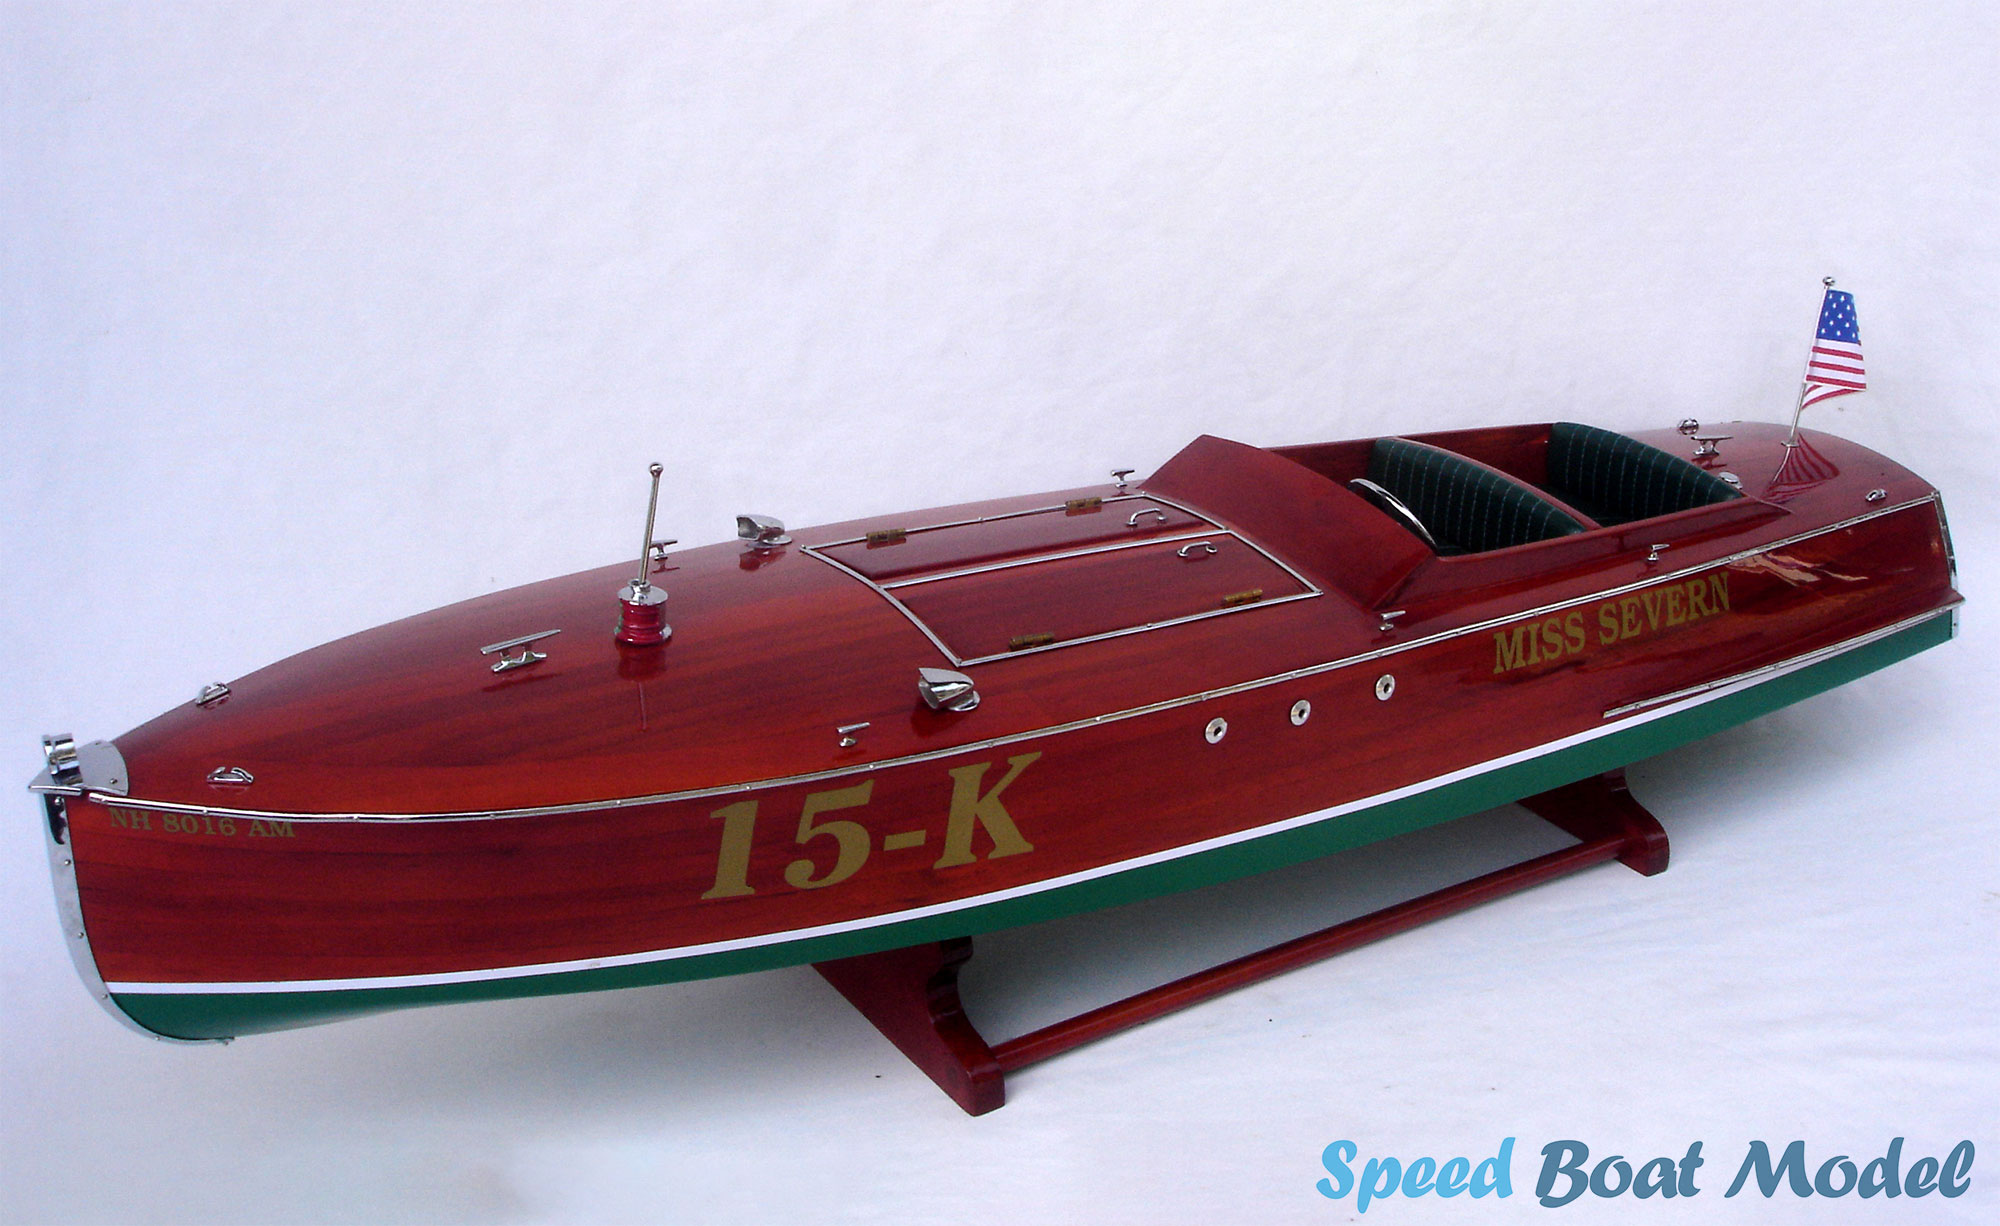 Miss Severn Speed Boat Model 31.5"